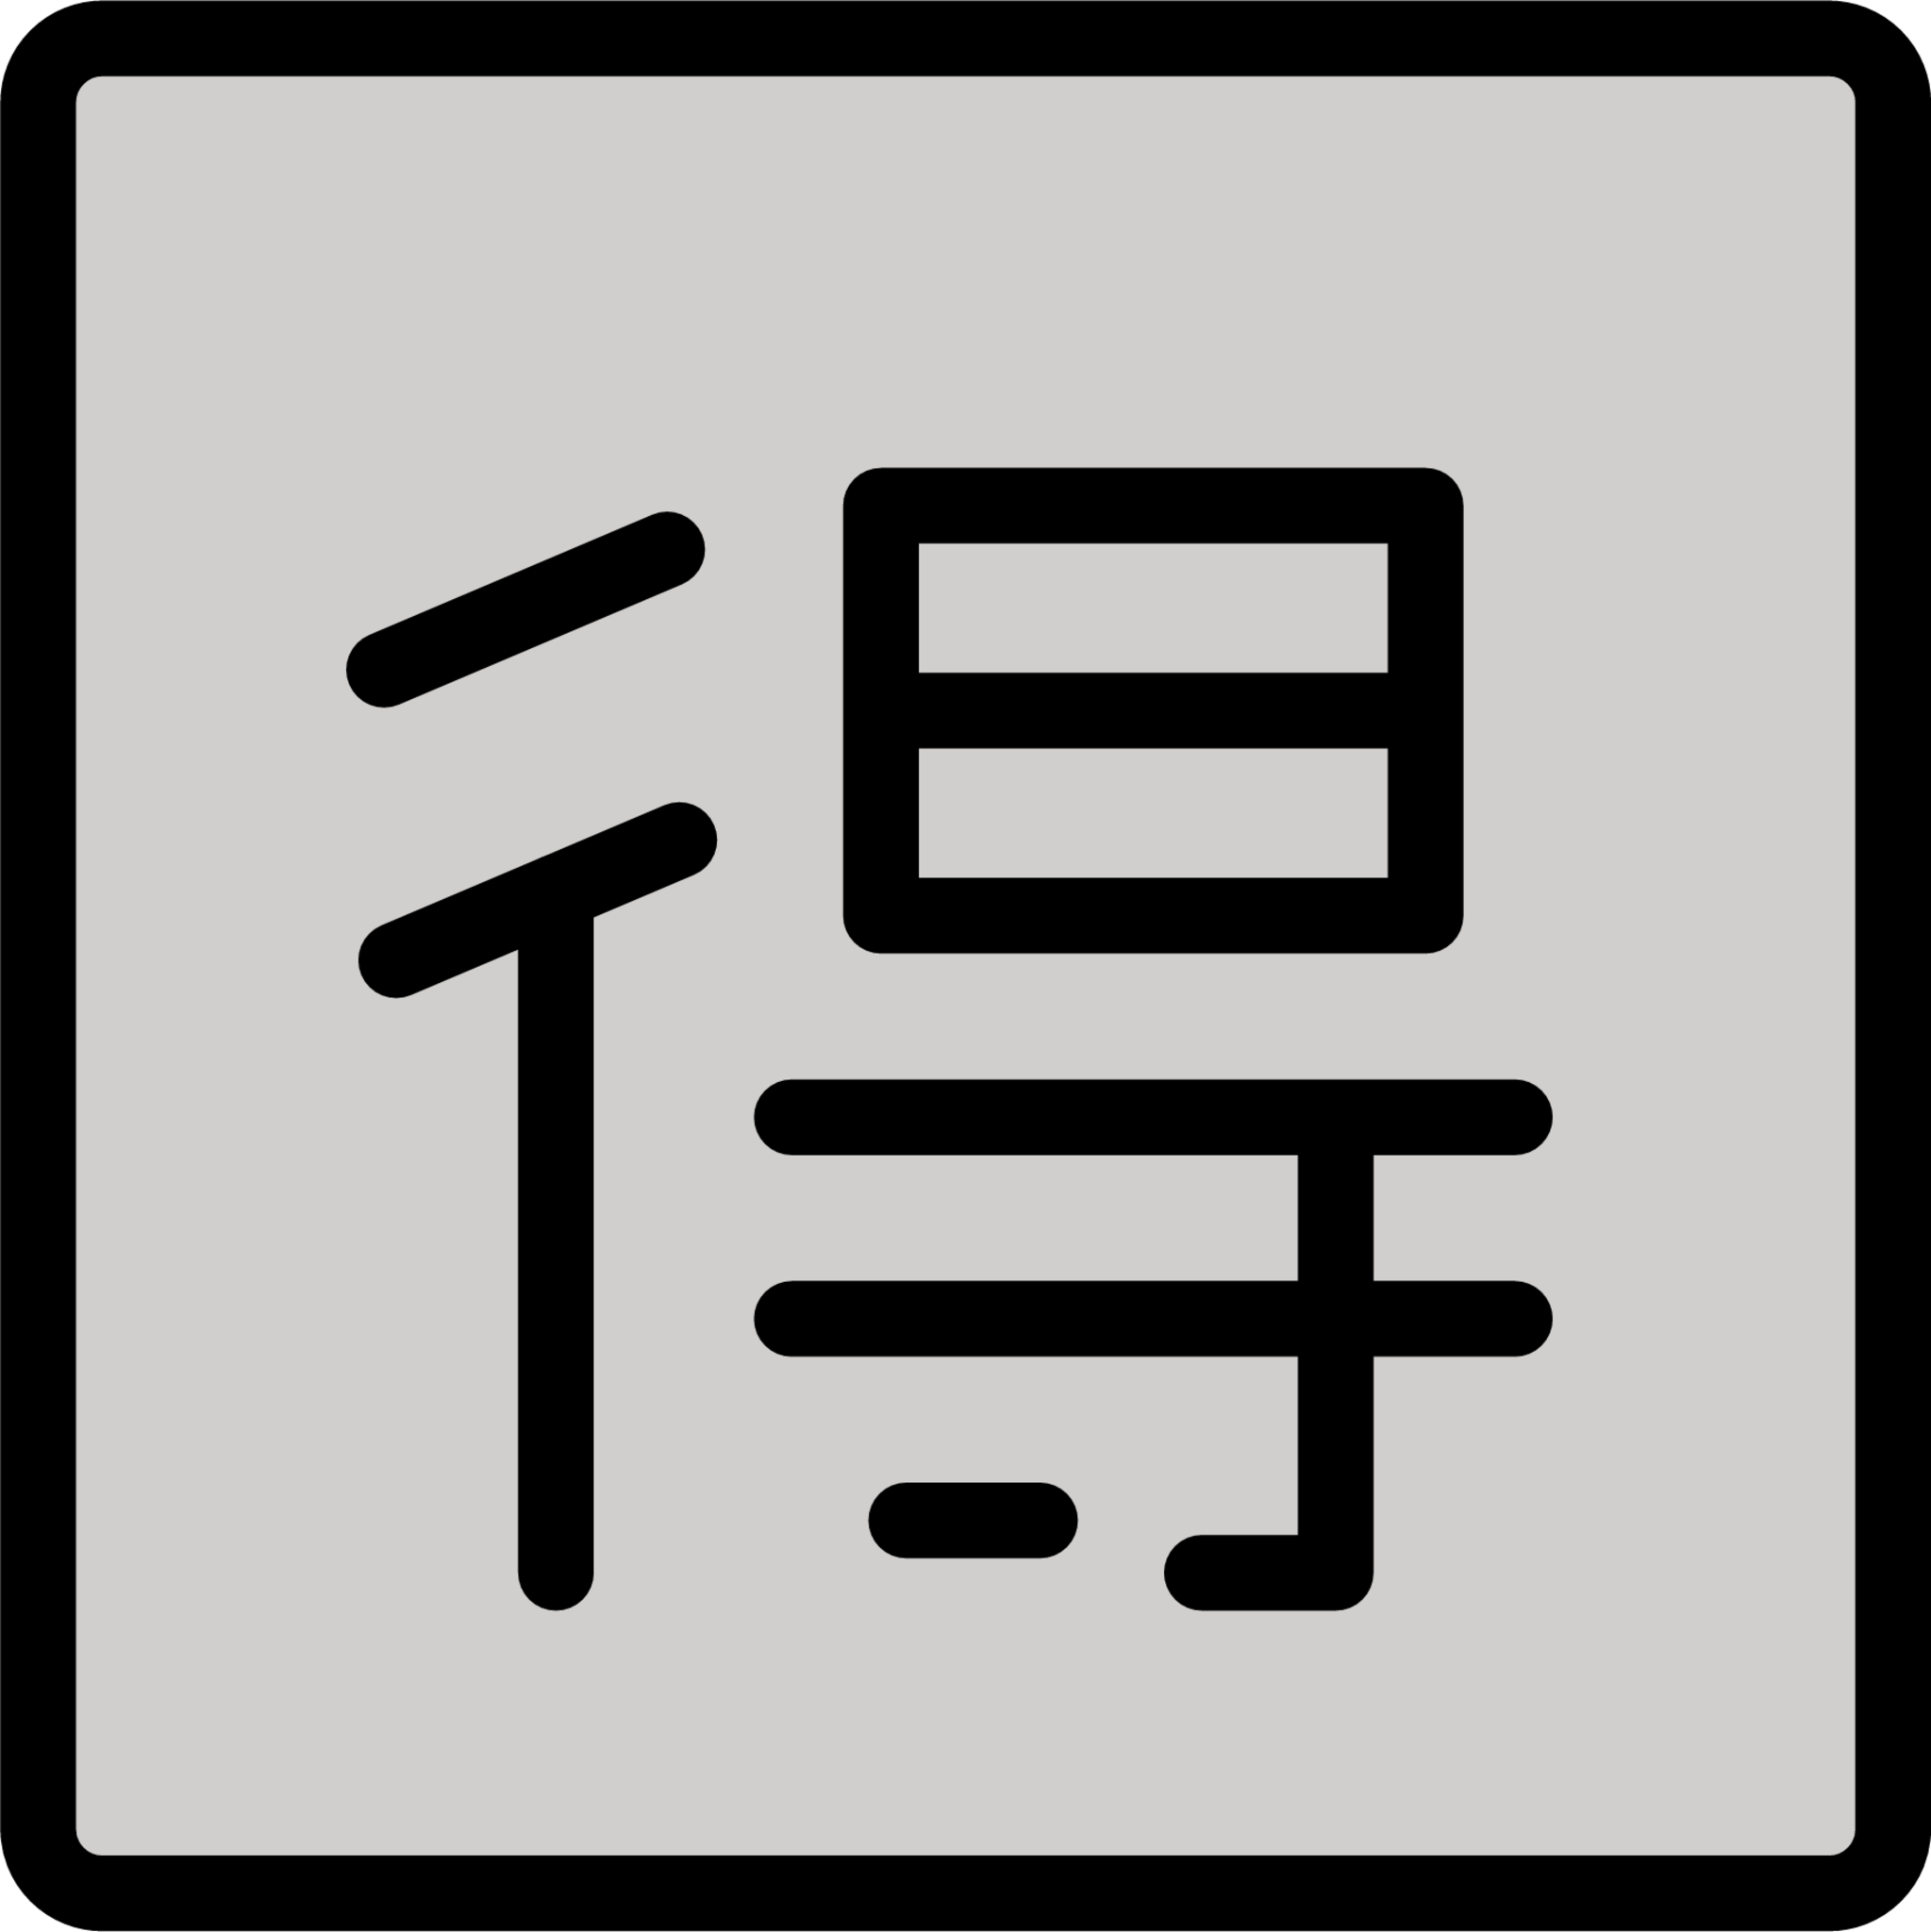 Japanese “bargain” button emoji